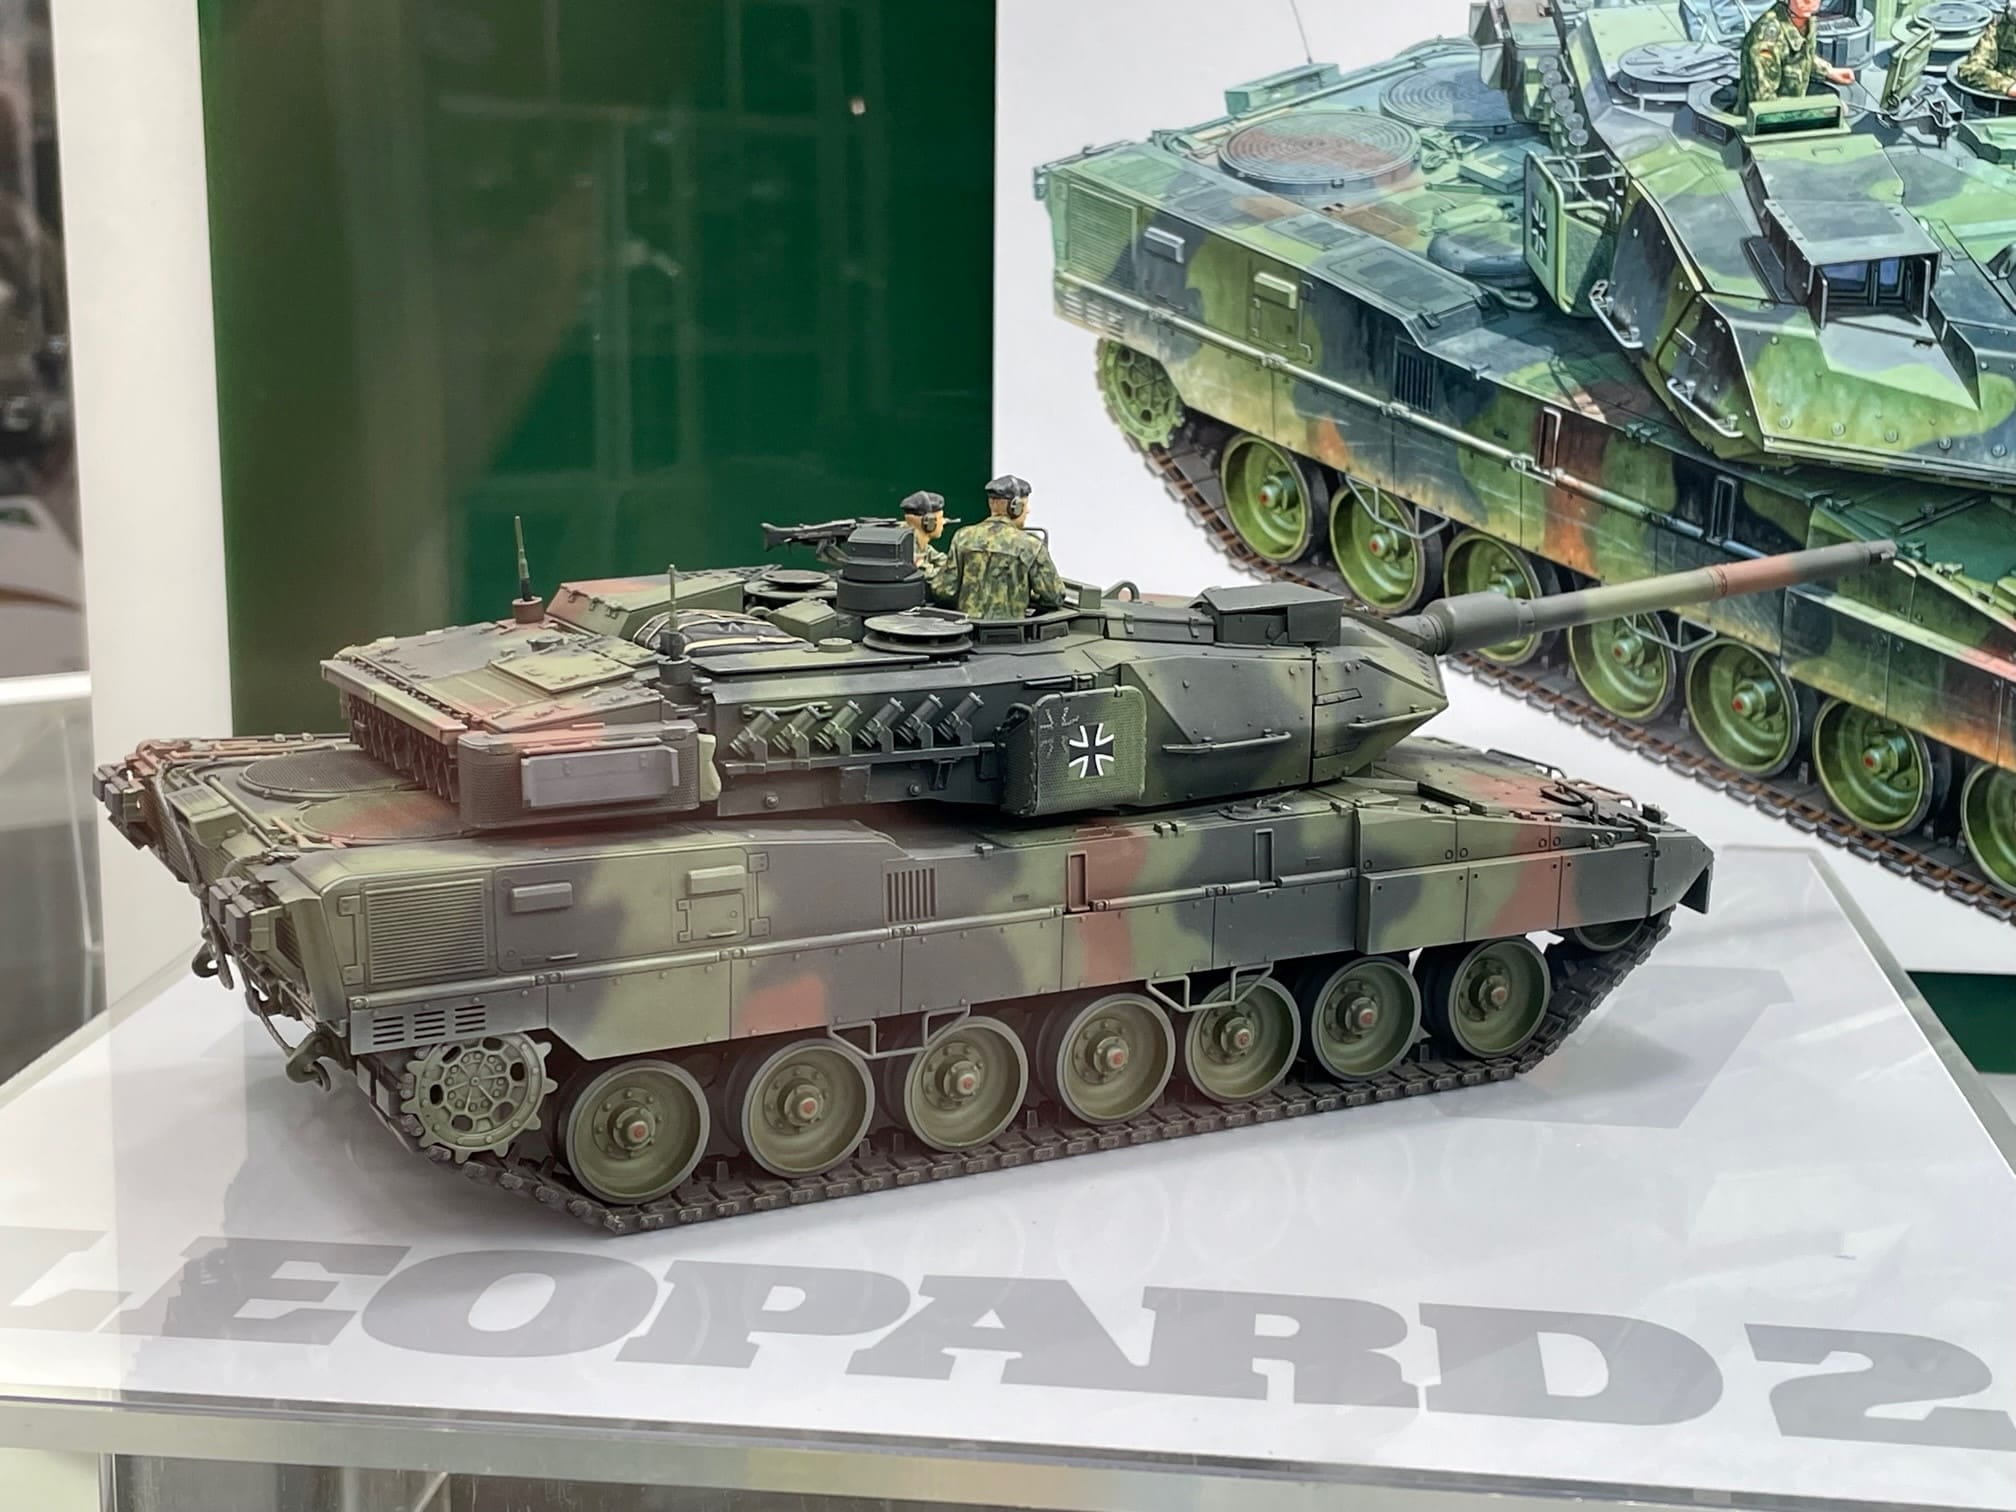 Tamiya 1:35 Kampfpanzer Leopard 2 A7V Panzer Plastik Modellbausatz